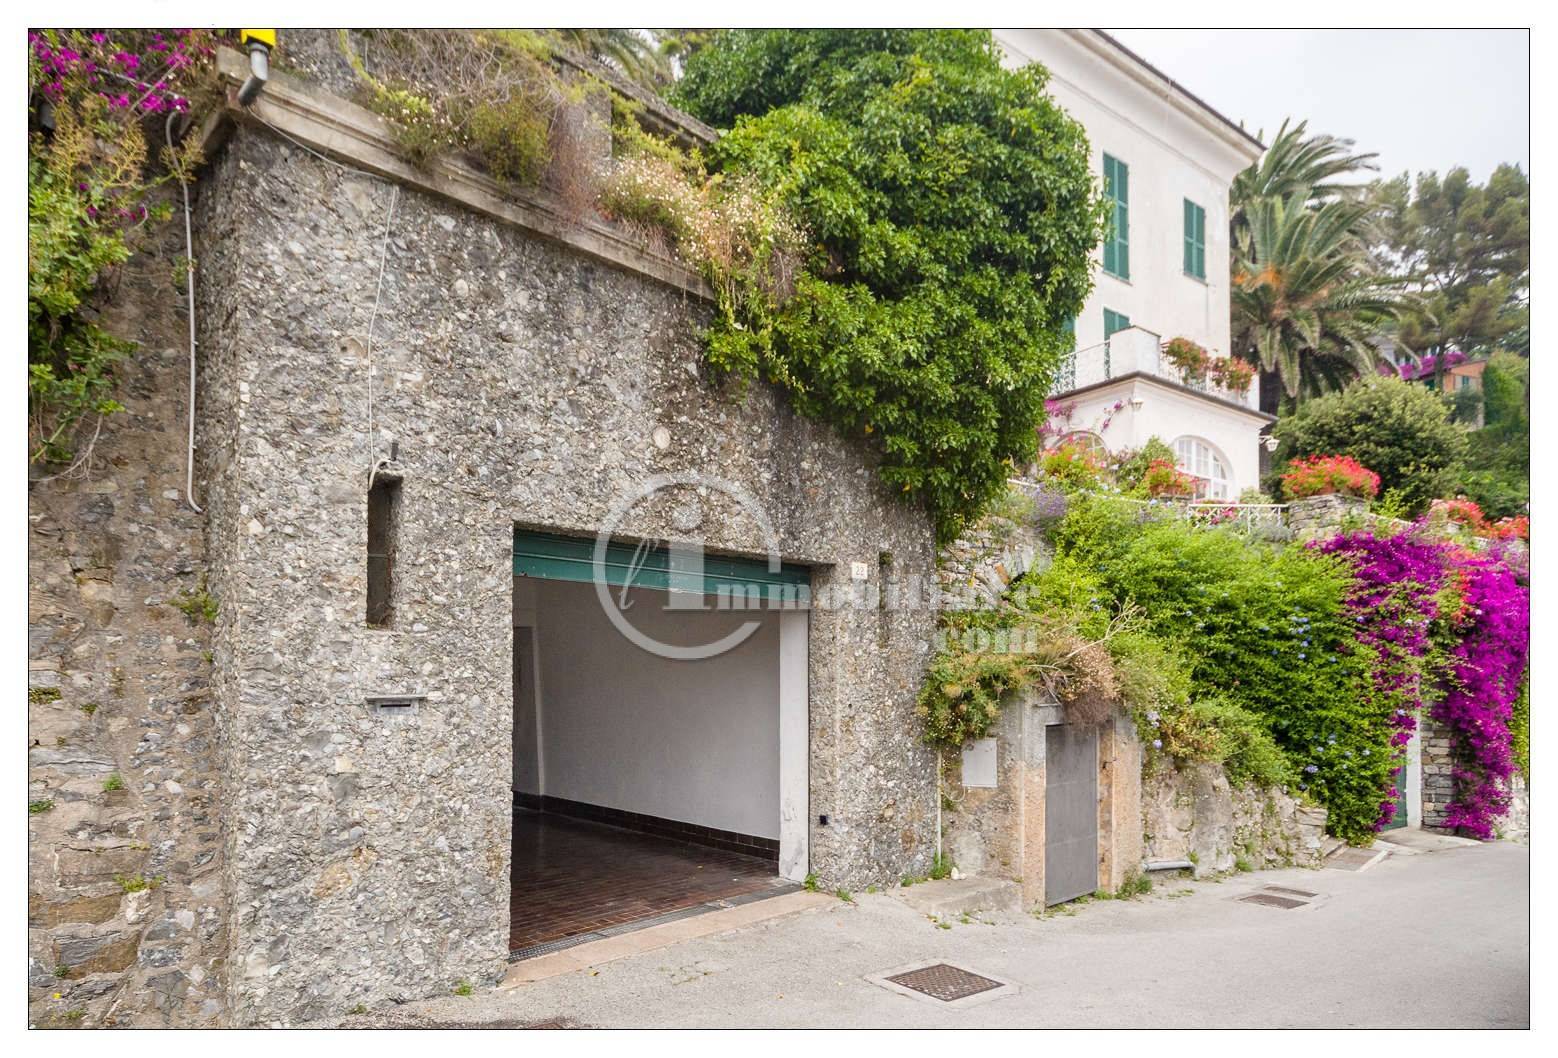 Villa in Vendita a Santa Margherita Ligure: 5 locali, 600 mq - Foto 14